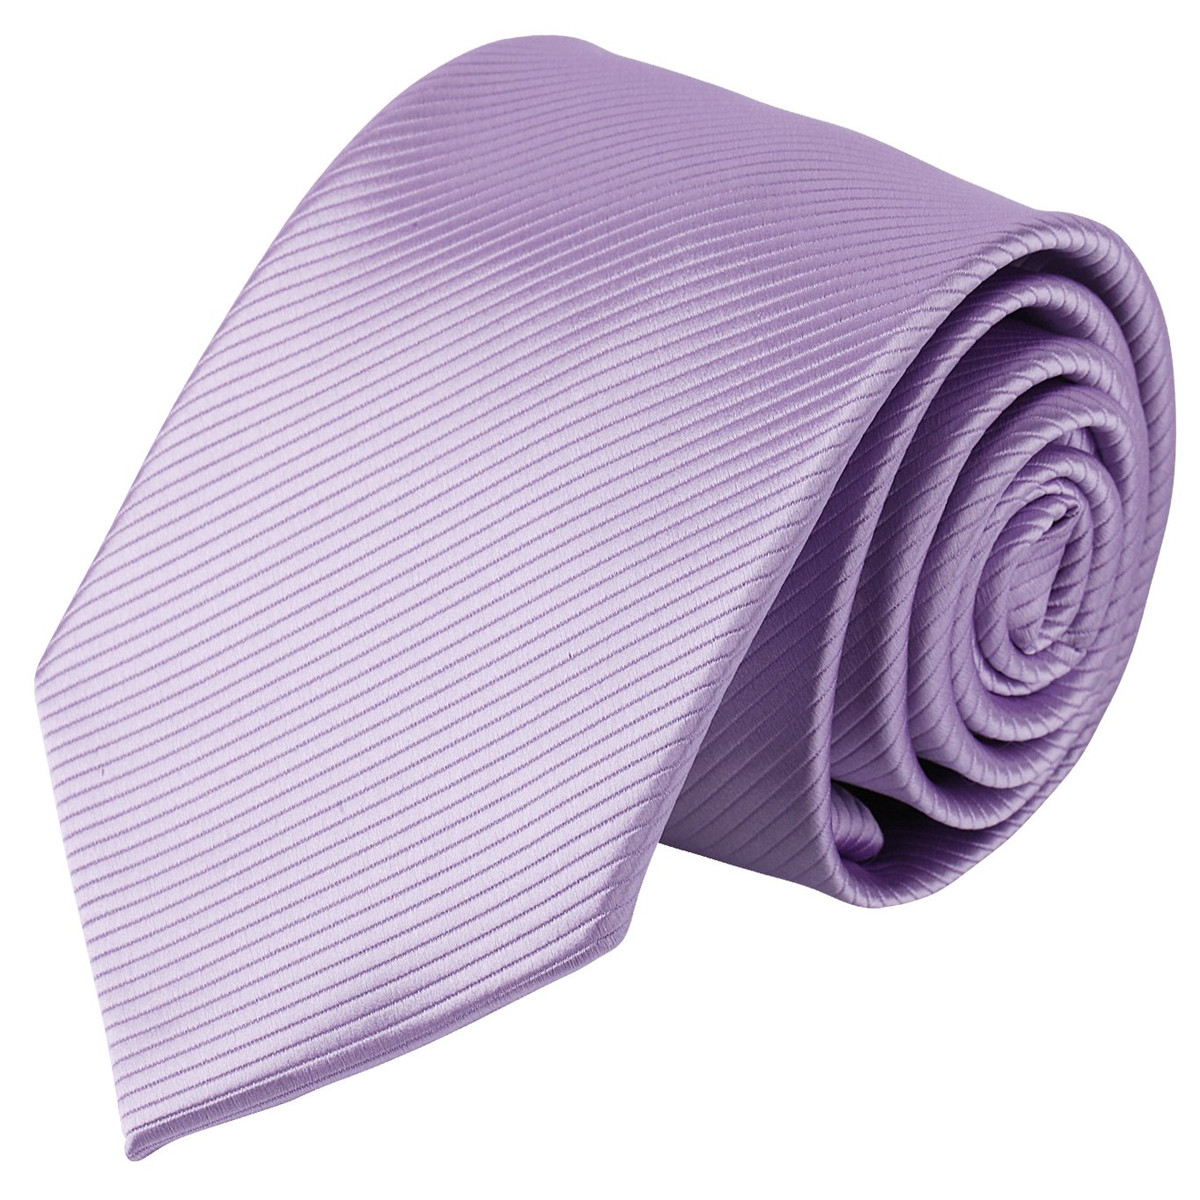 Men's Tone on Tone Corded Neck Tie - Lavender